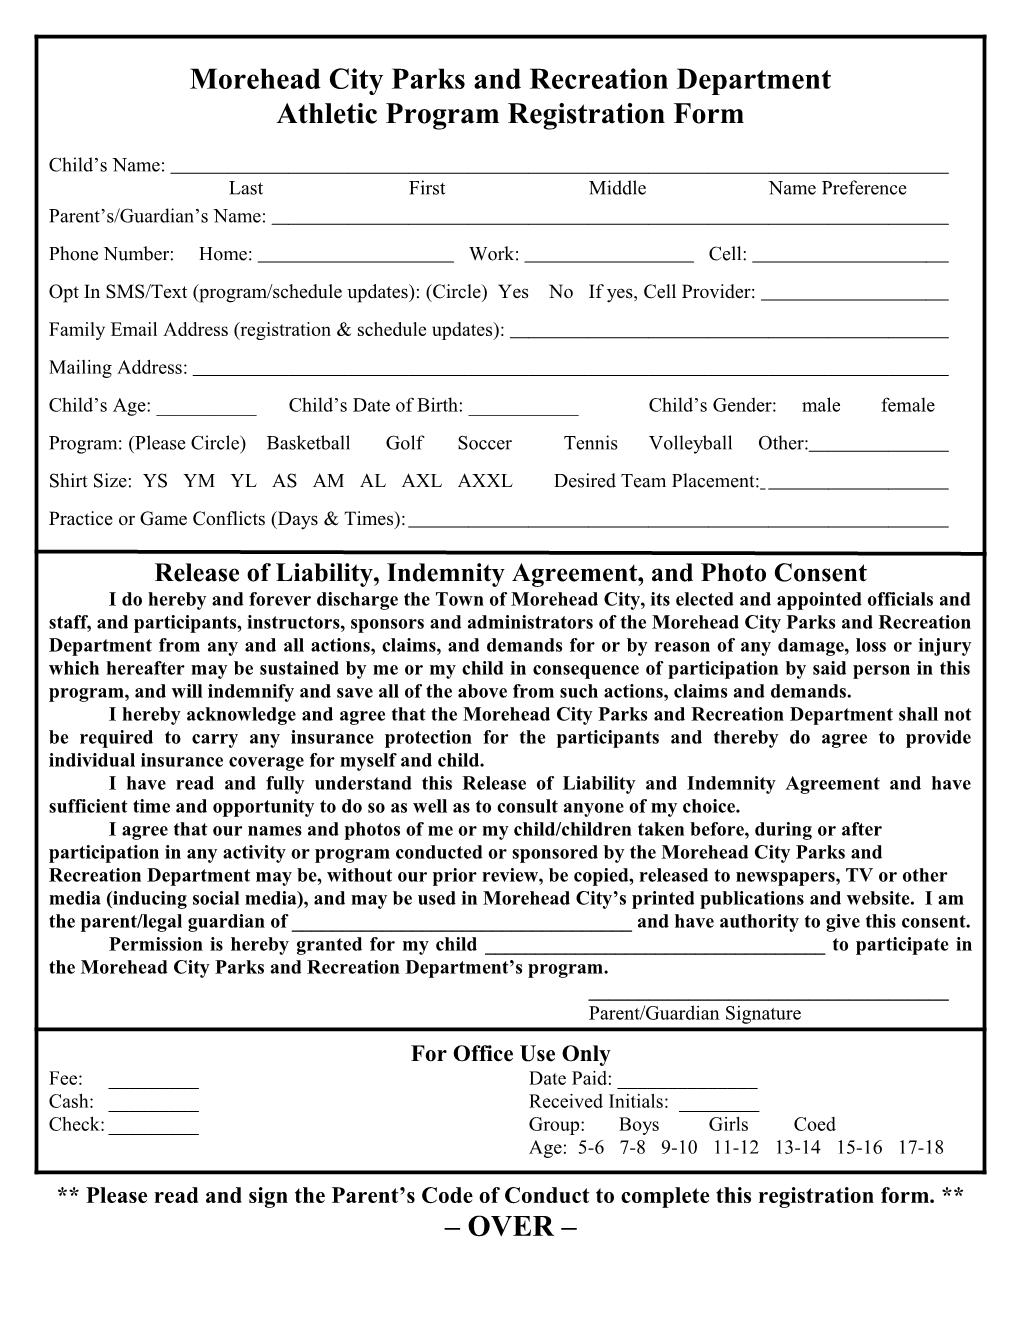 Athletic Program Registration Form